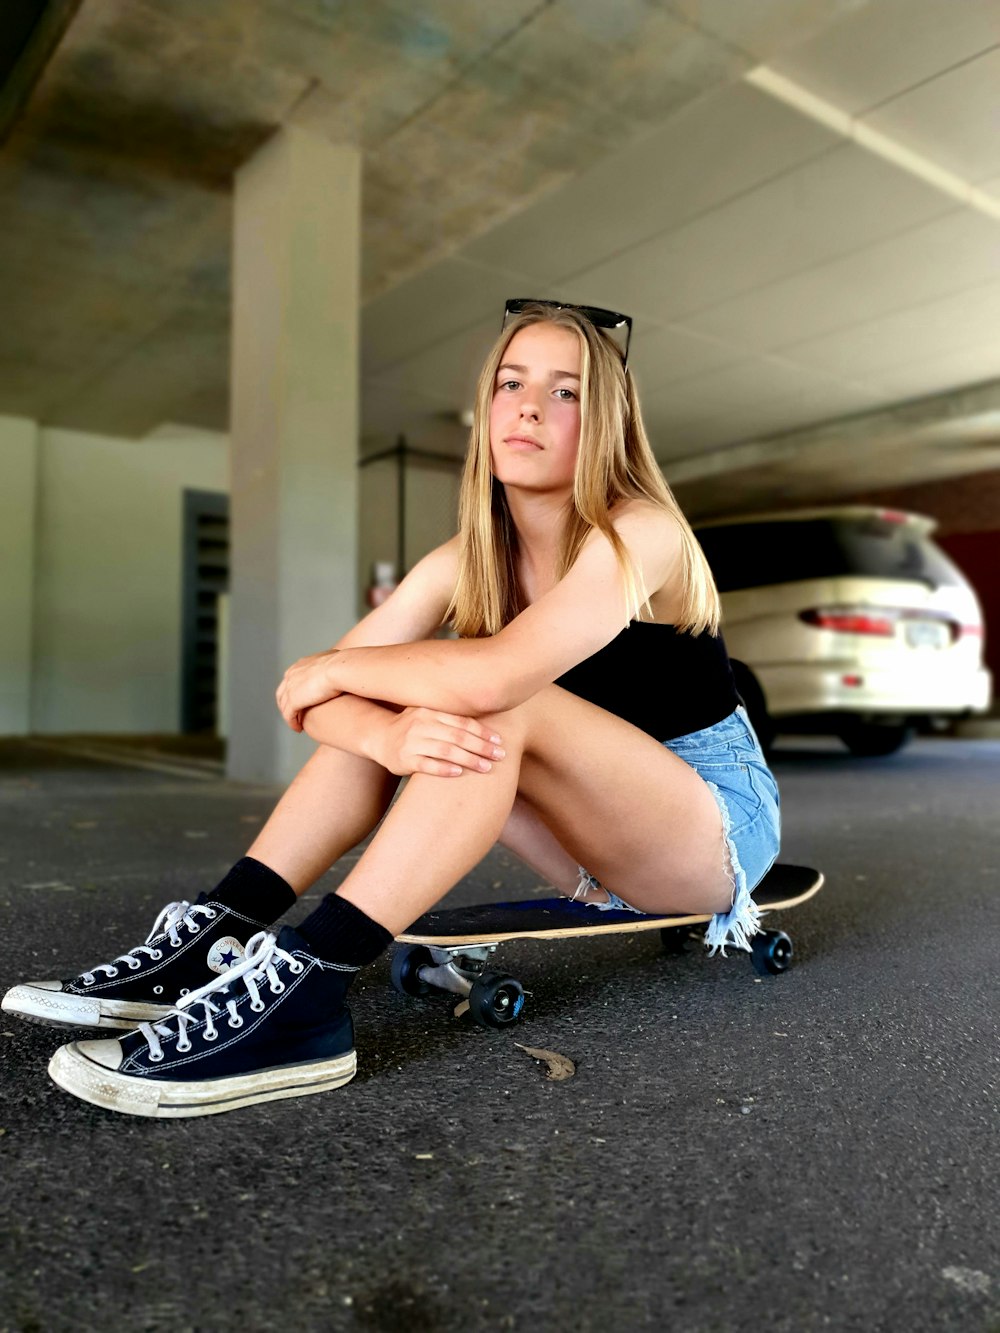 a girl sitting on a skateboard in a parking garage